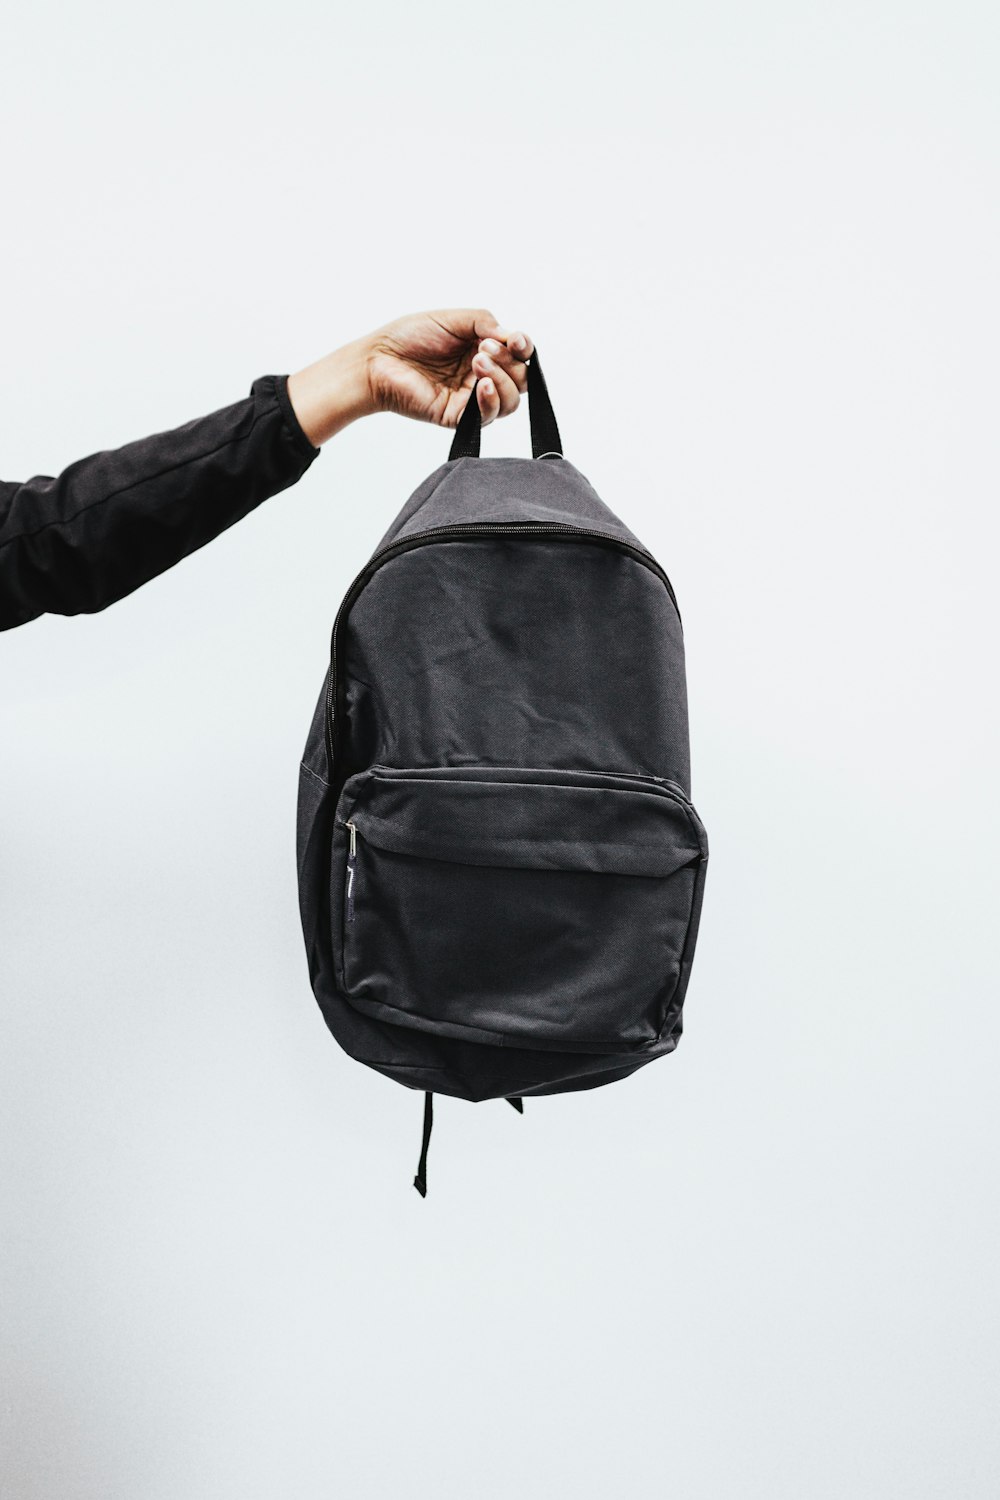 person in black jacket holding black backpack